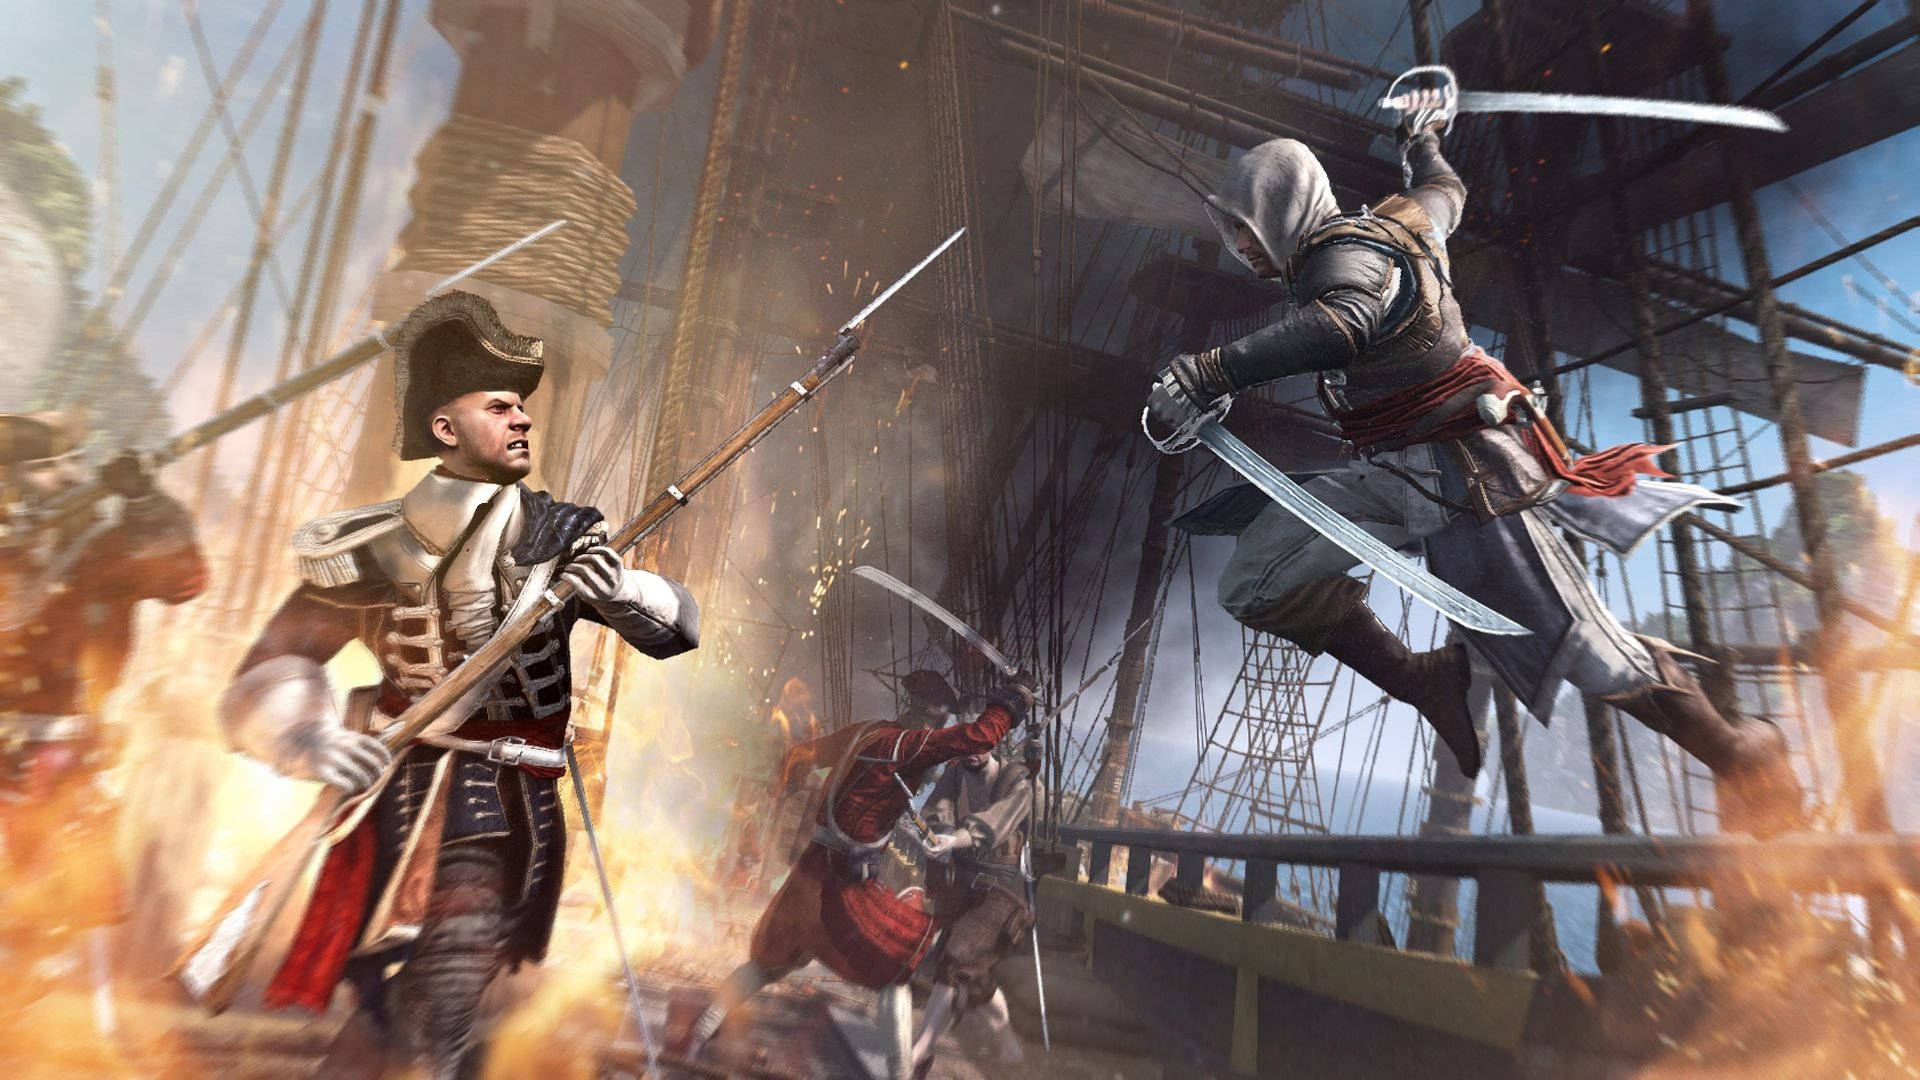 Jumping Assassin's Creed Black Flag Scene Wallpaper